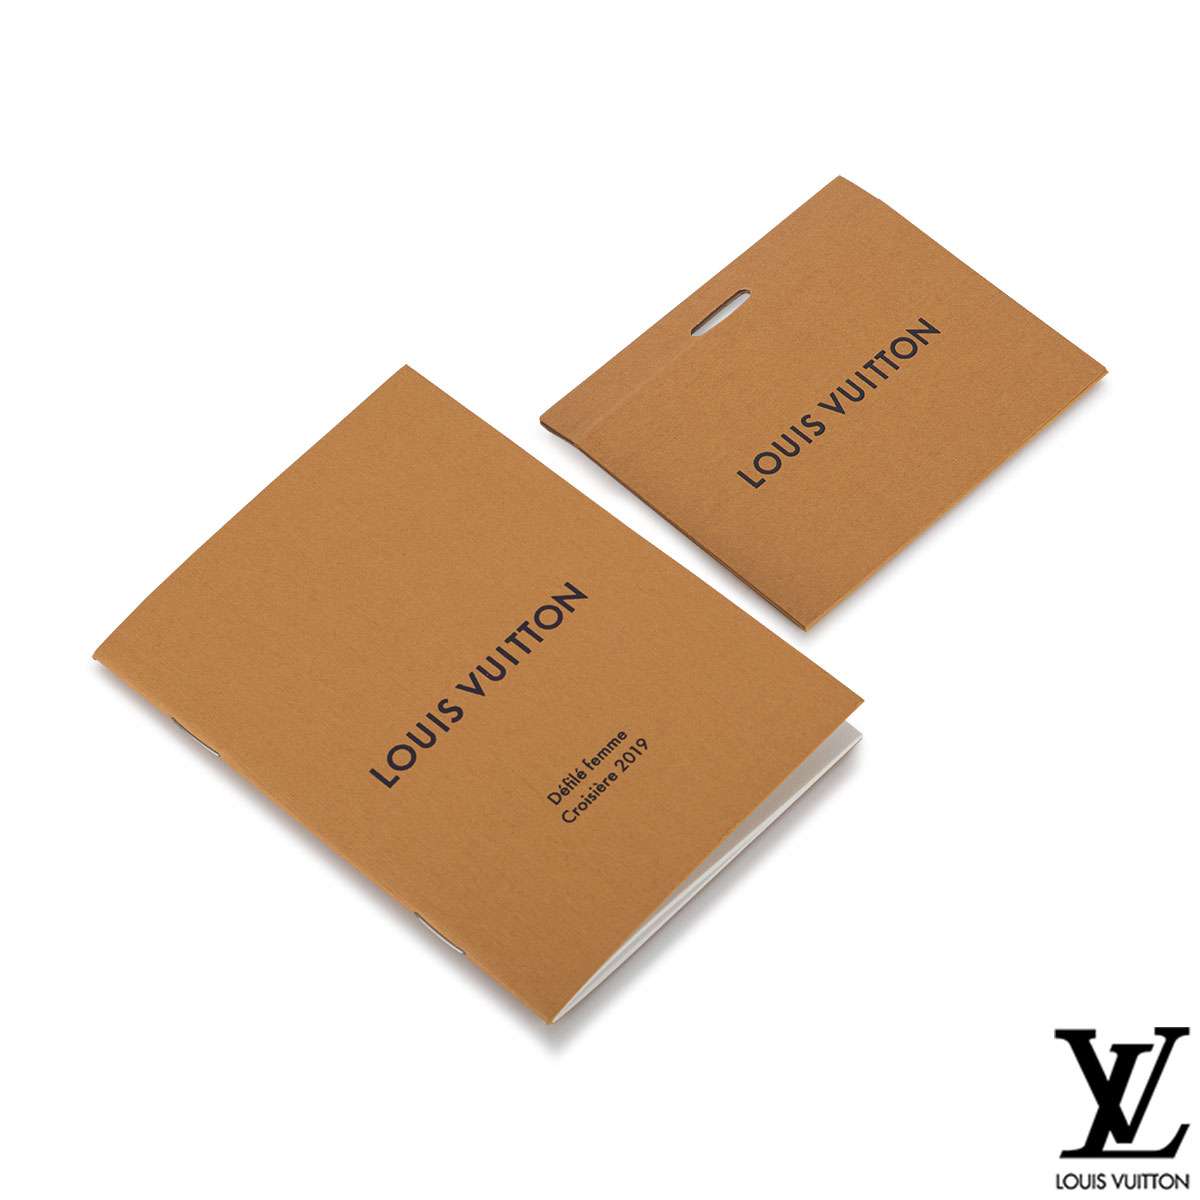 Louis Vuitton Limited Edition Grace Coddington Catogram Neverfull MM in  Monogram Vachette - SOLD